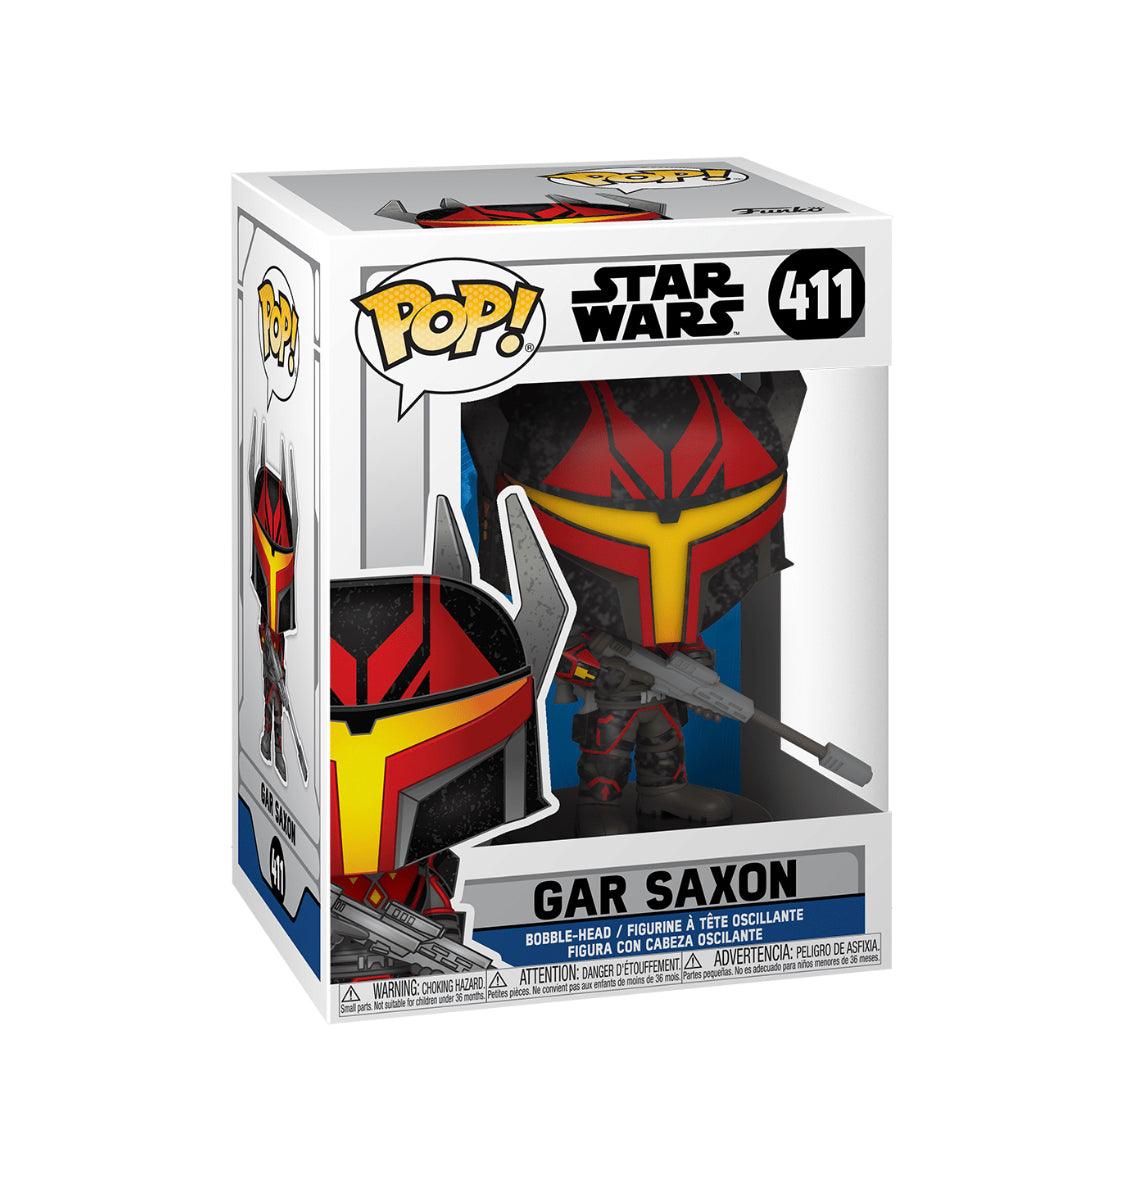 Pop! Star Wars - Gar Saxon - #411 - Hobby Champion Inc